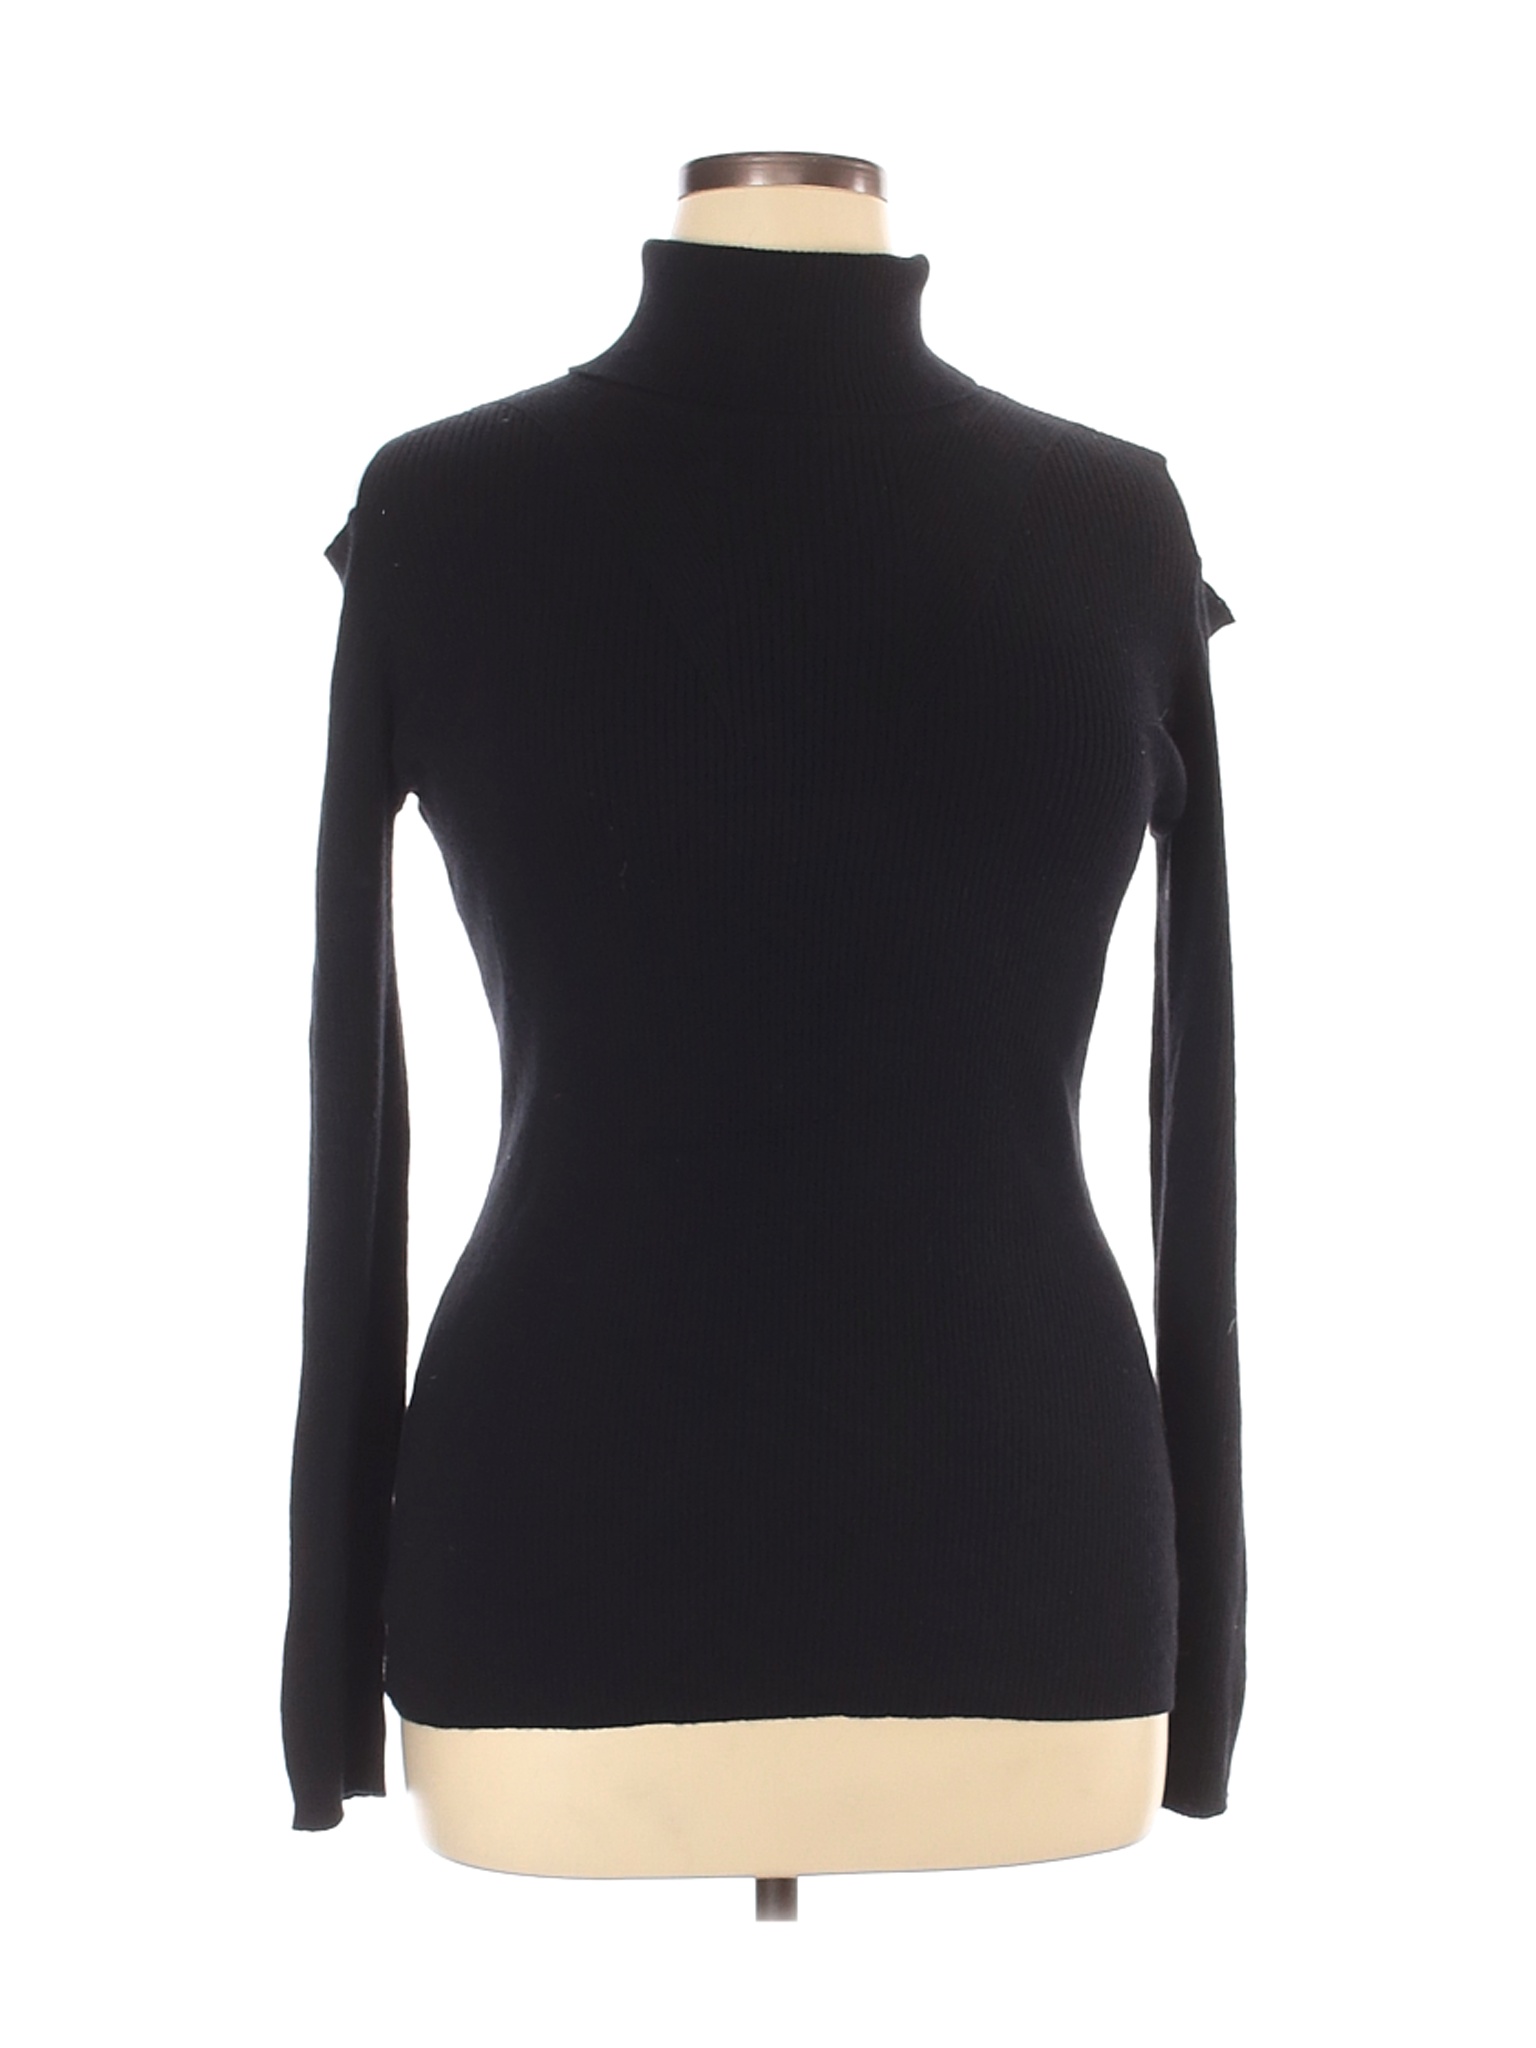 Athleta Women Black Turtleneck Sweater XL | eBay